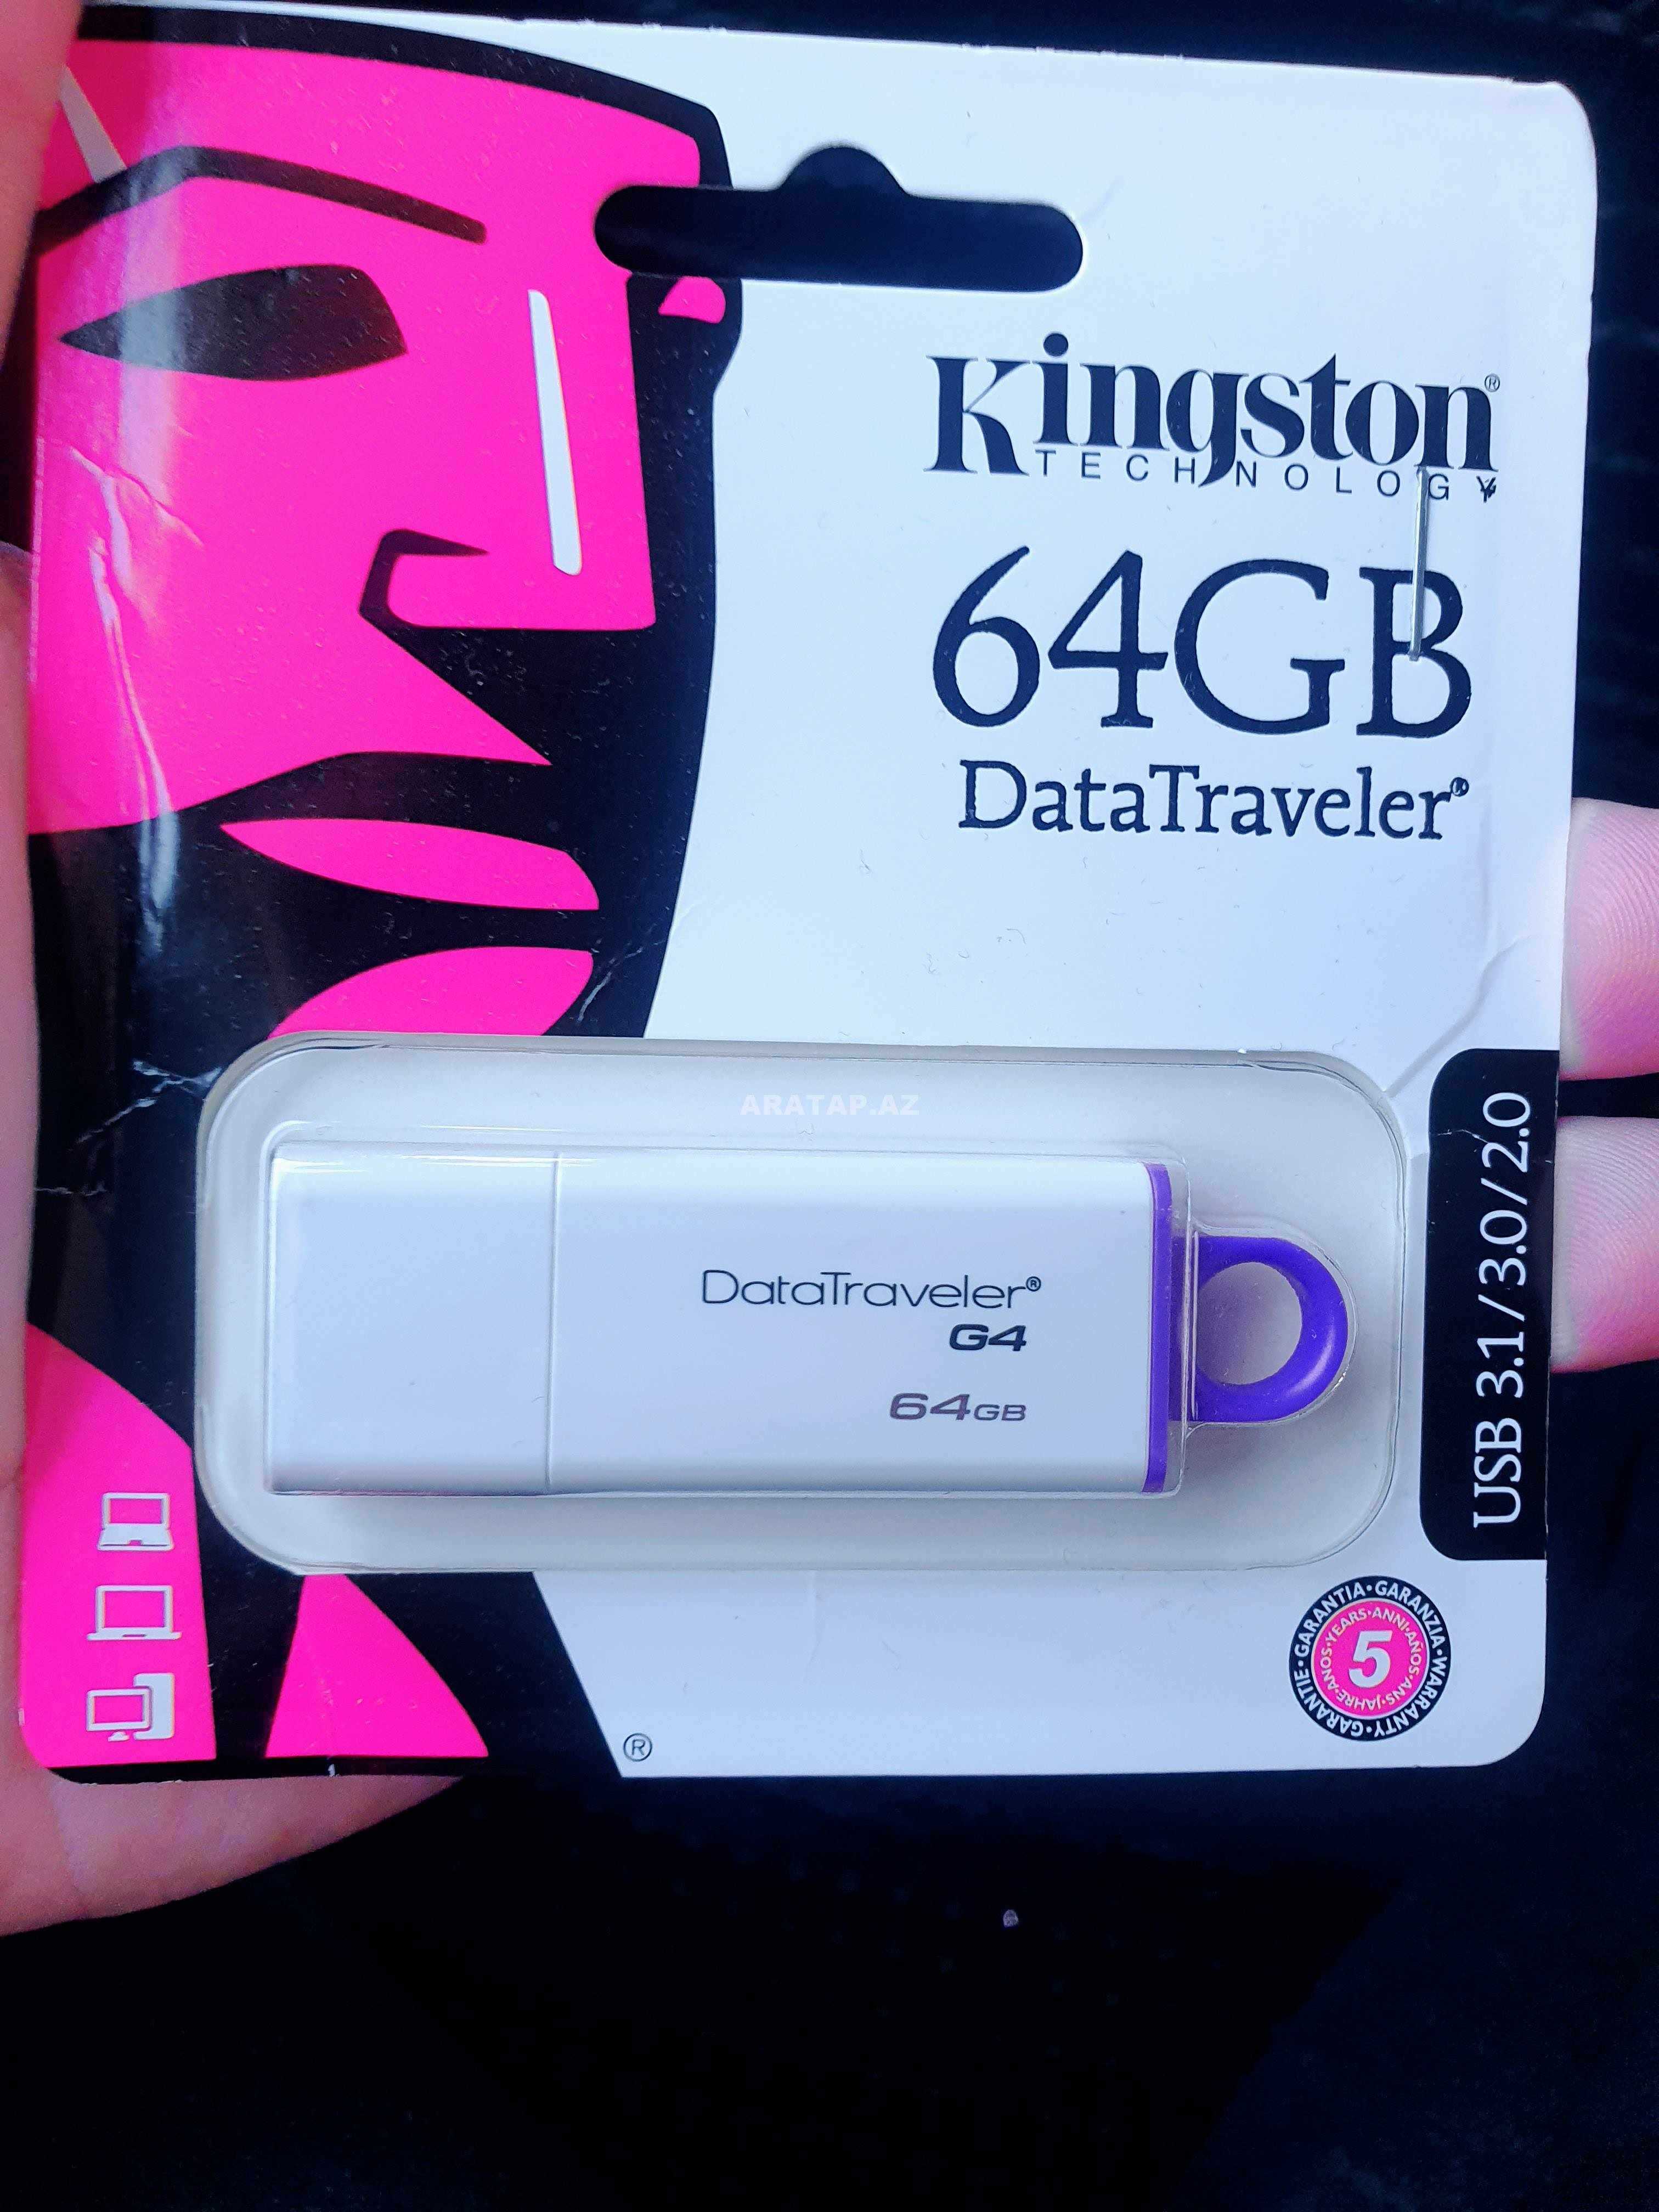 Kingston 64 Gb Usb 3.0 Flaşkart Datatraveler G4